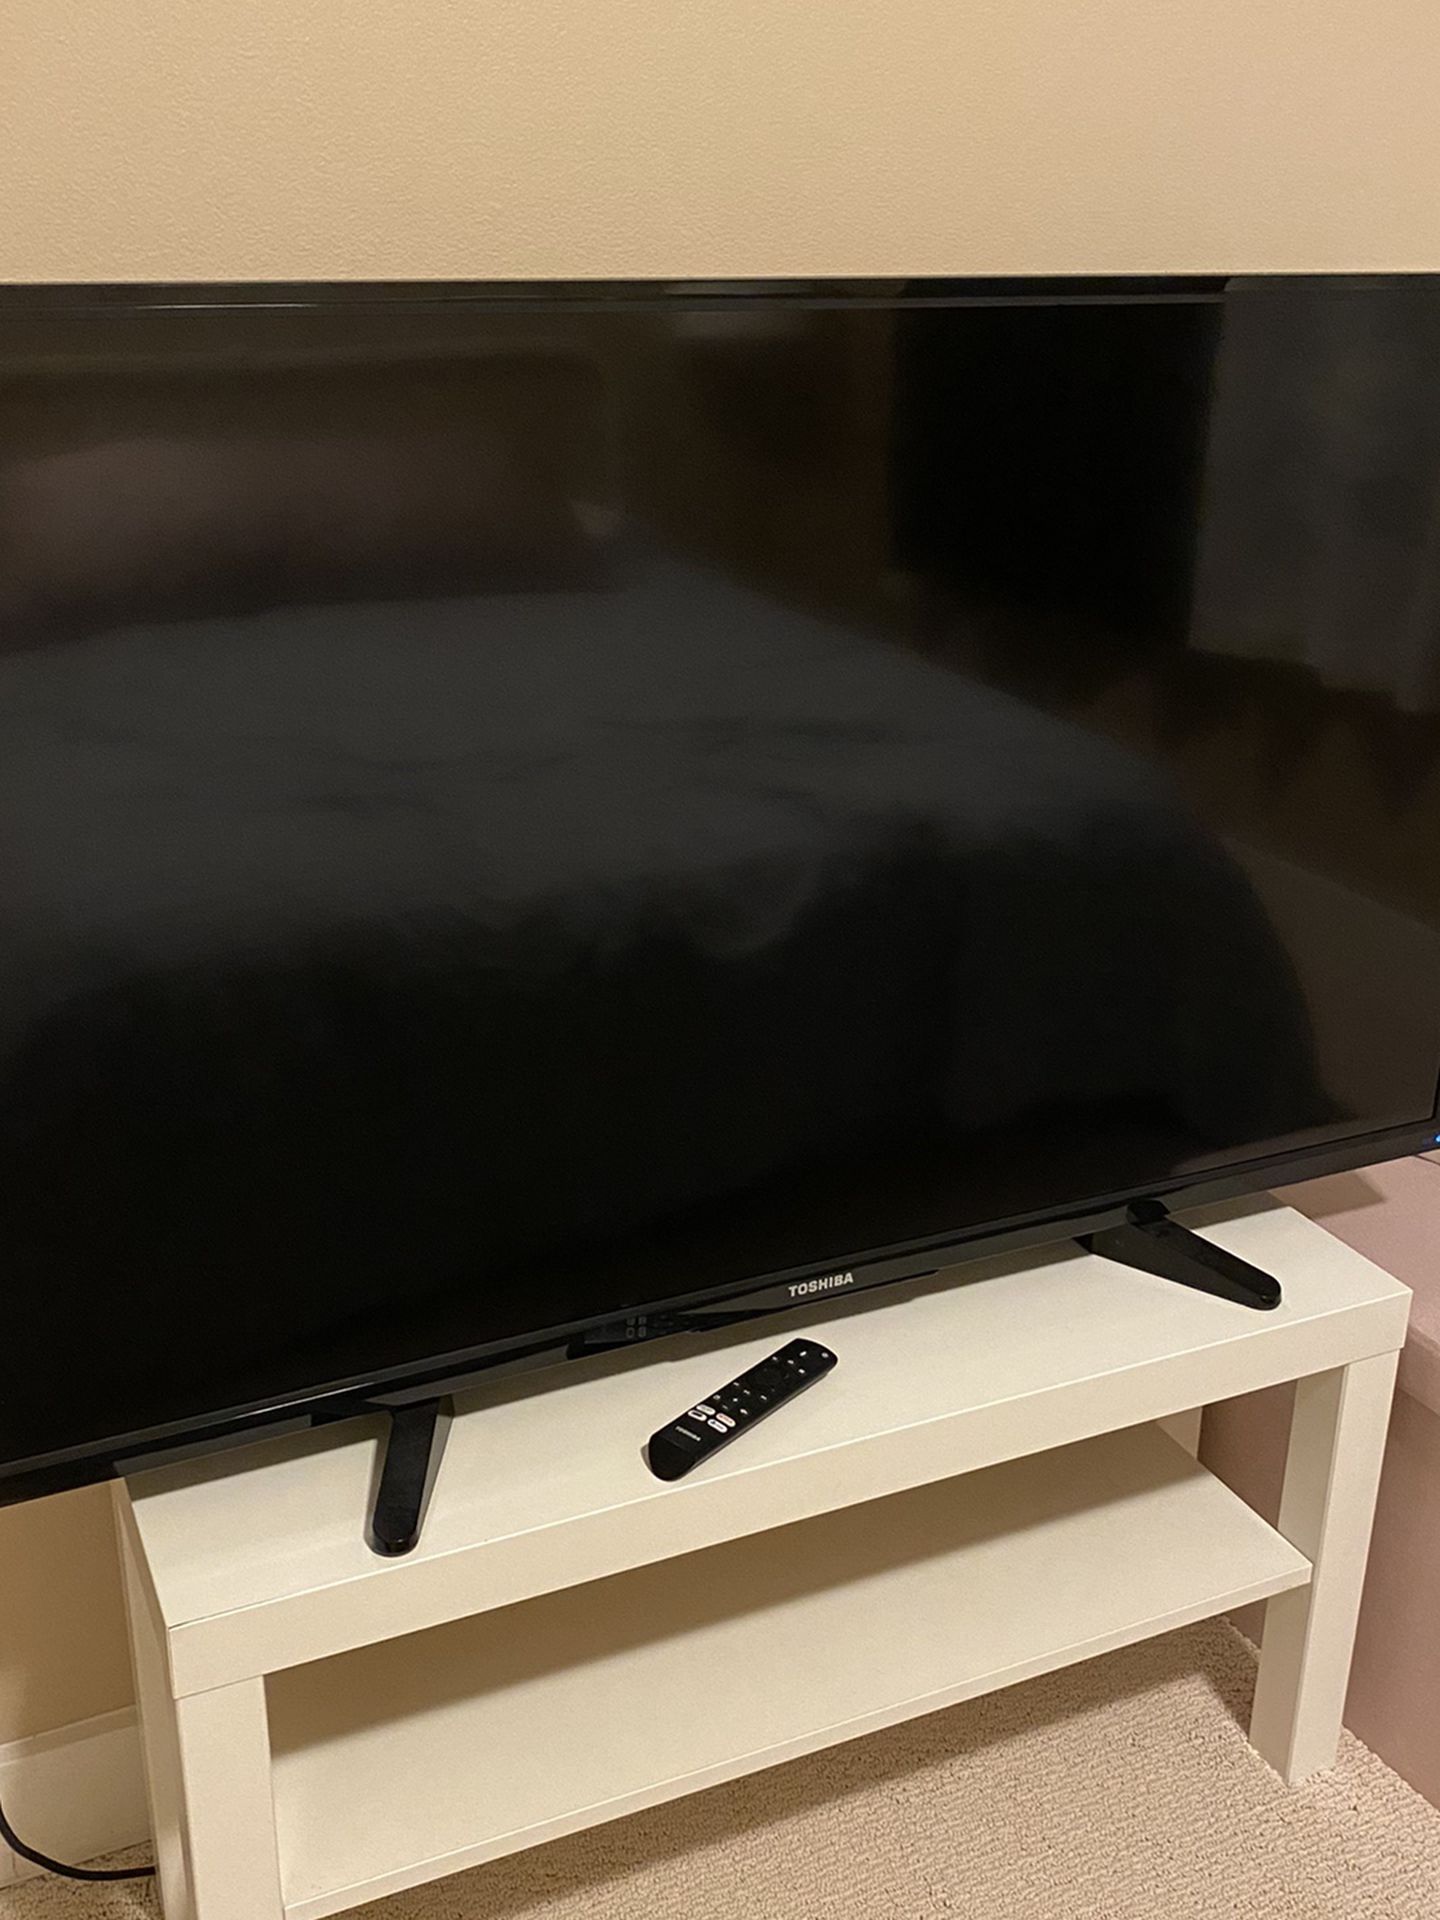 50” Toshiba LED Smart TV Amazon Fire TV Edition